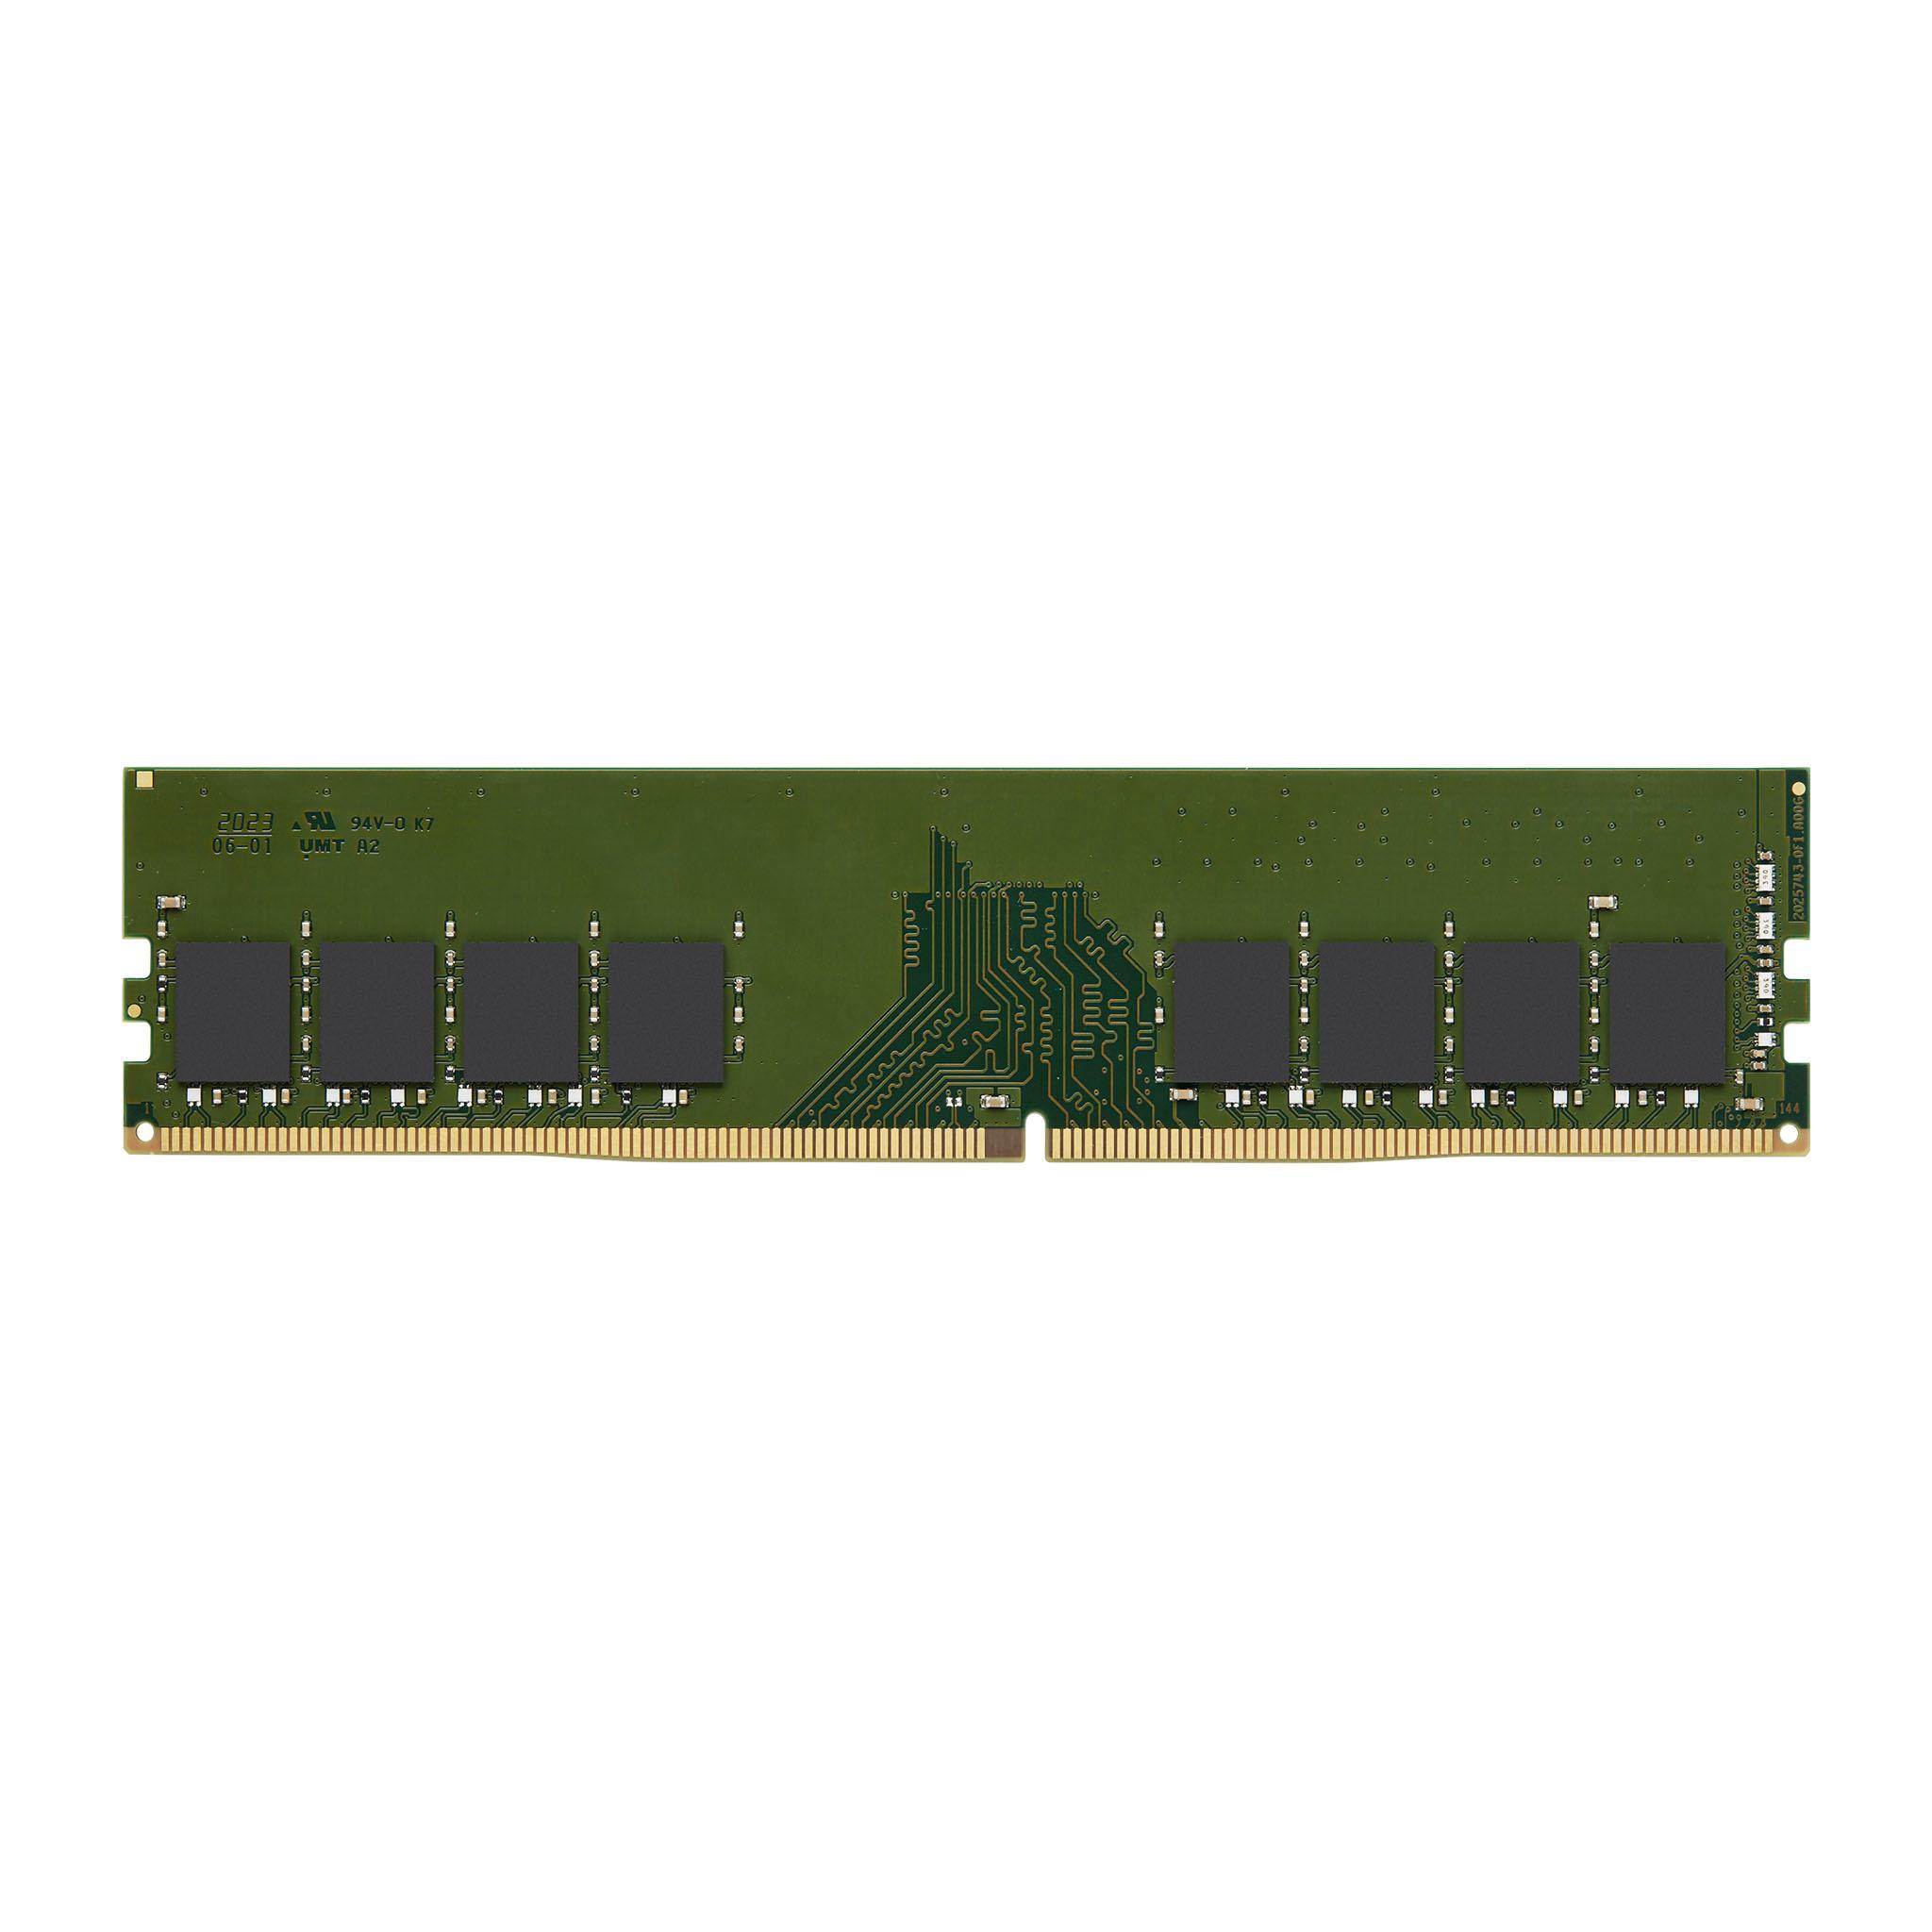 pesado Caballero temerario Kingston Memory: DDR4 3200MT/s Non-ECC Unbuffered DIMM - Kingston Technology